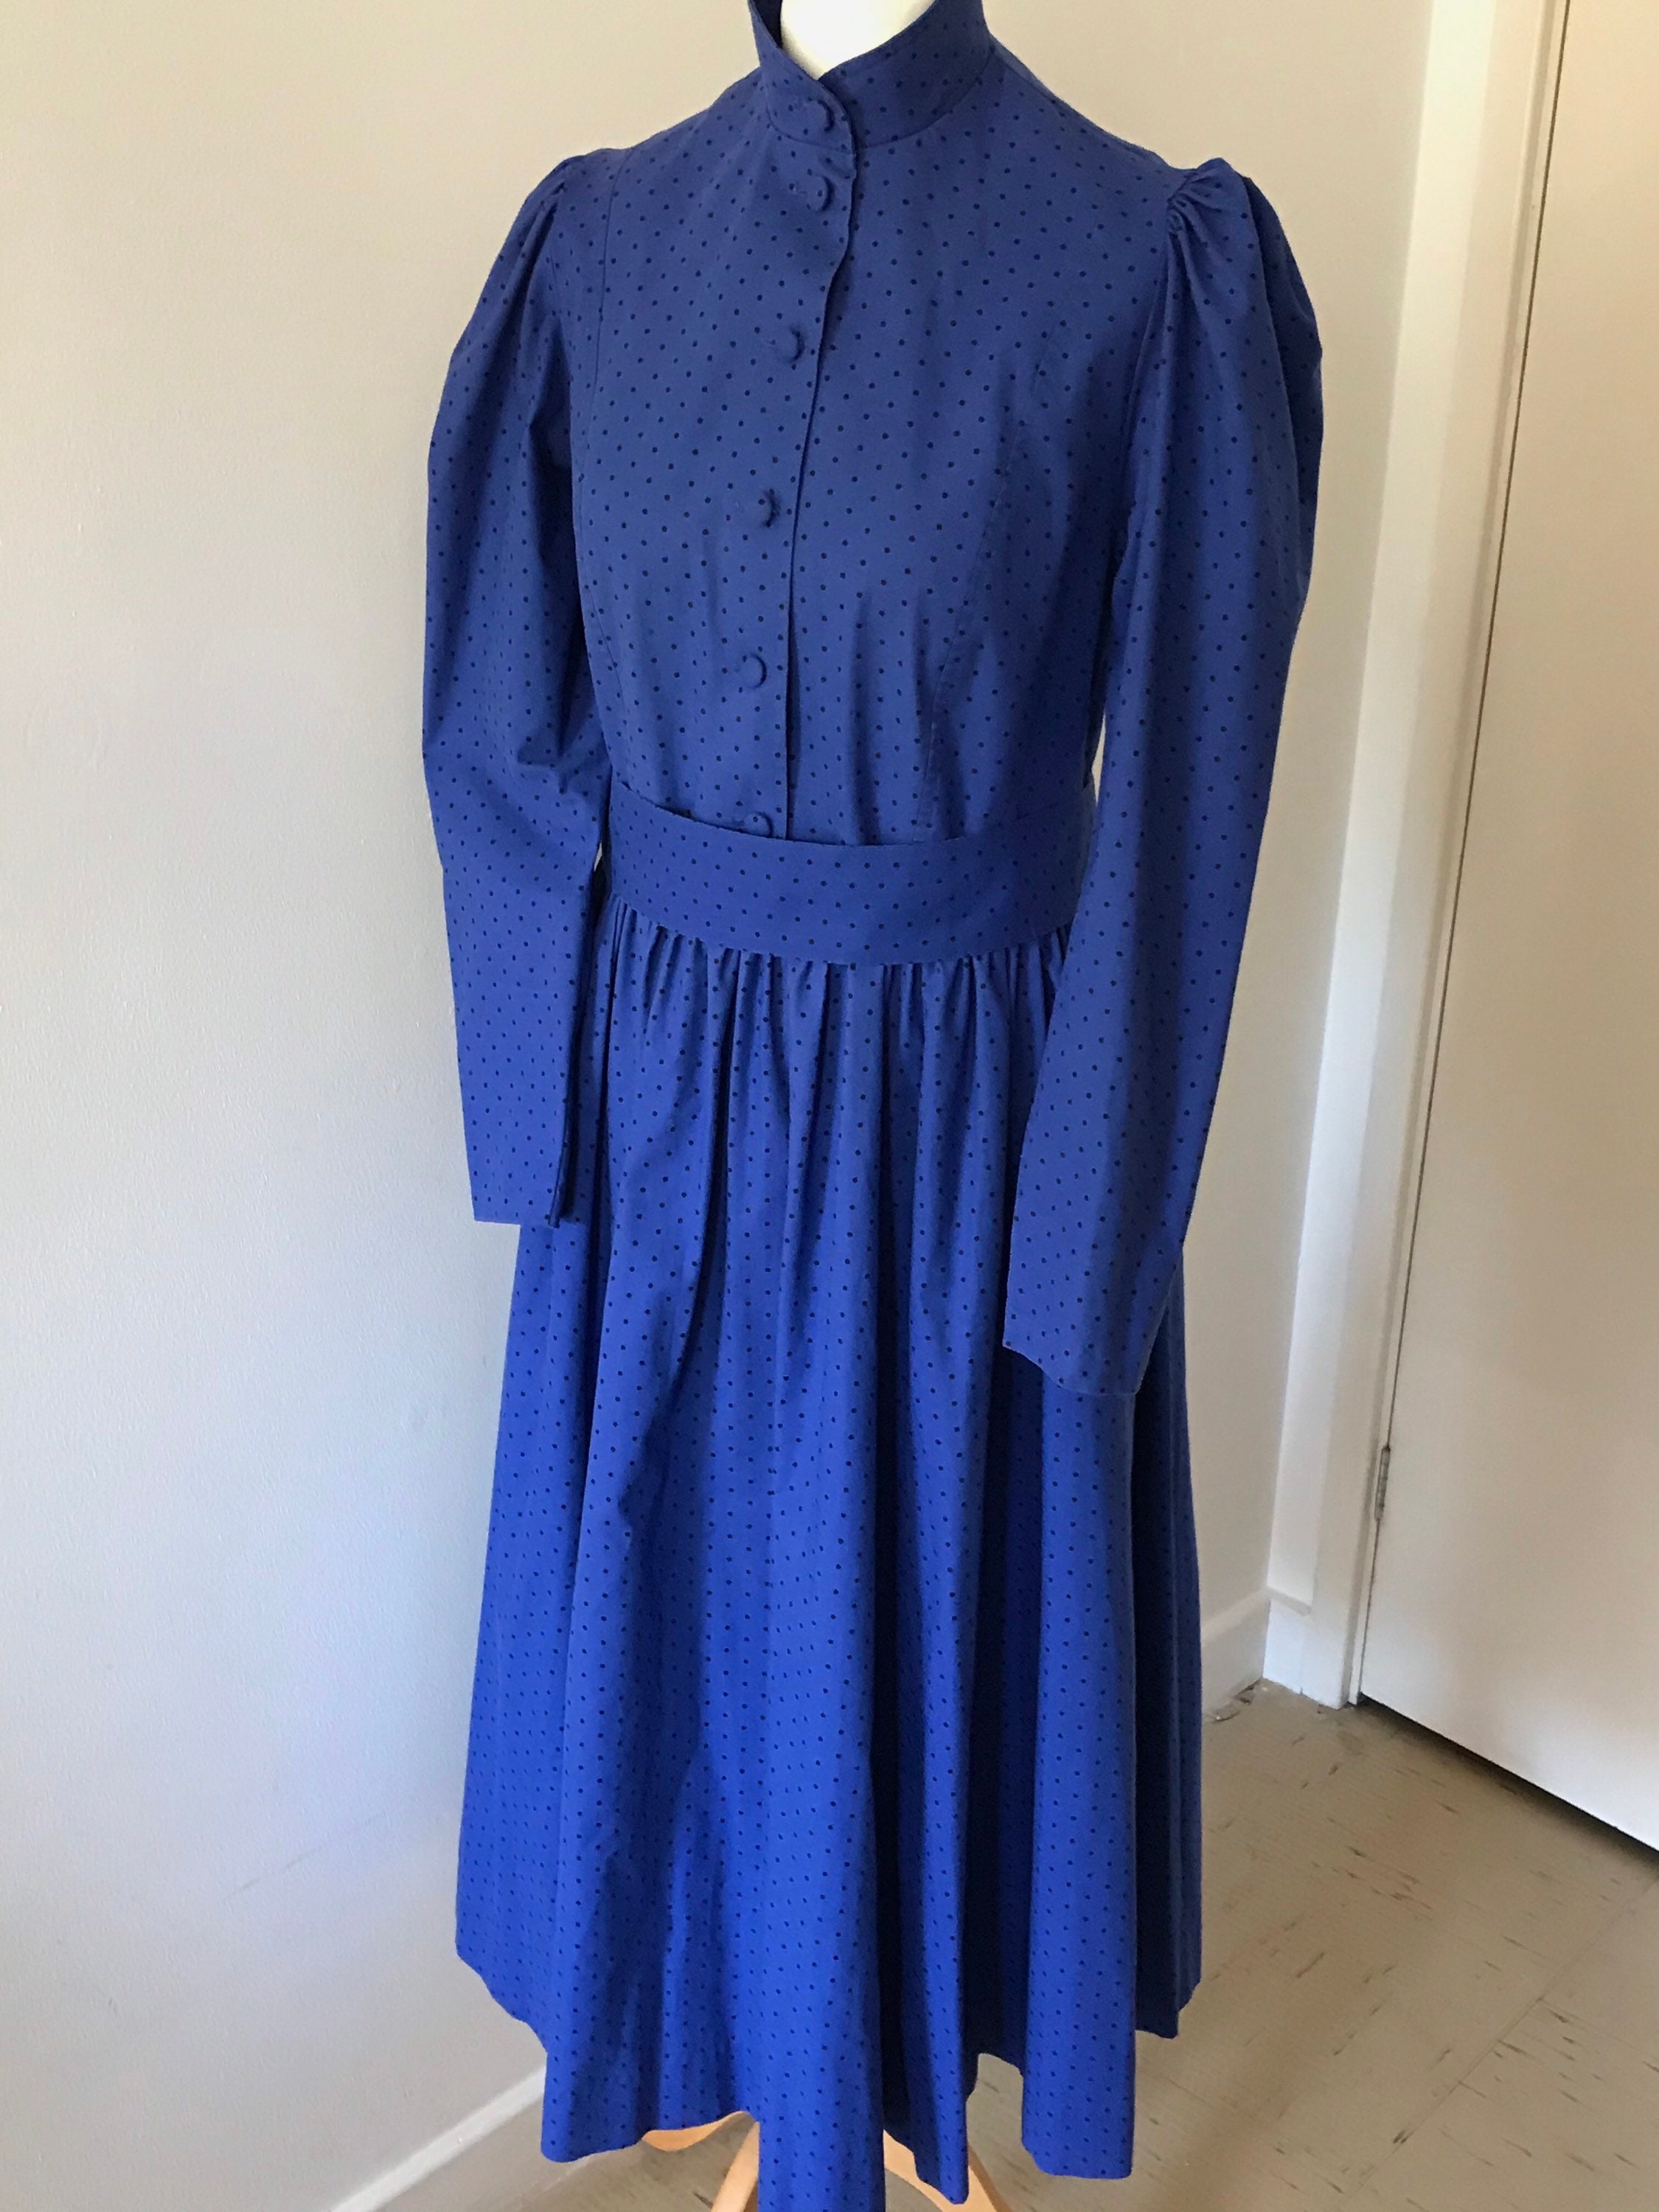 Laura Ashley vintage 80s blue polka dot long sleeve cotton | Etsy